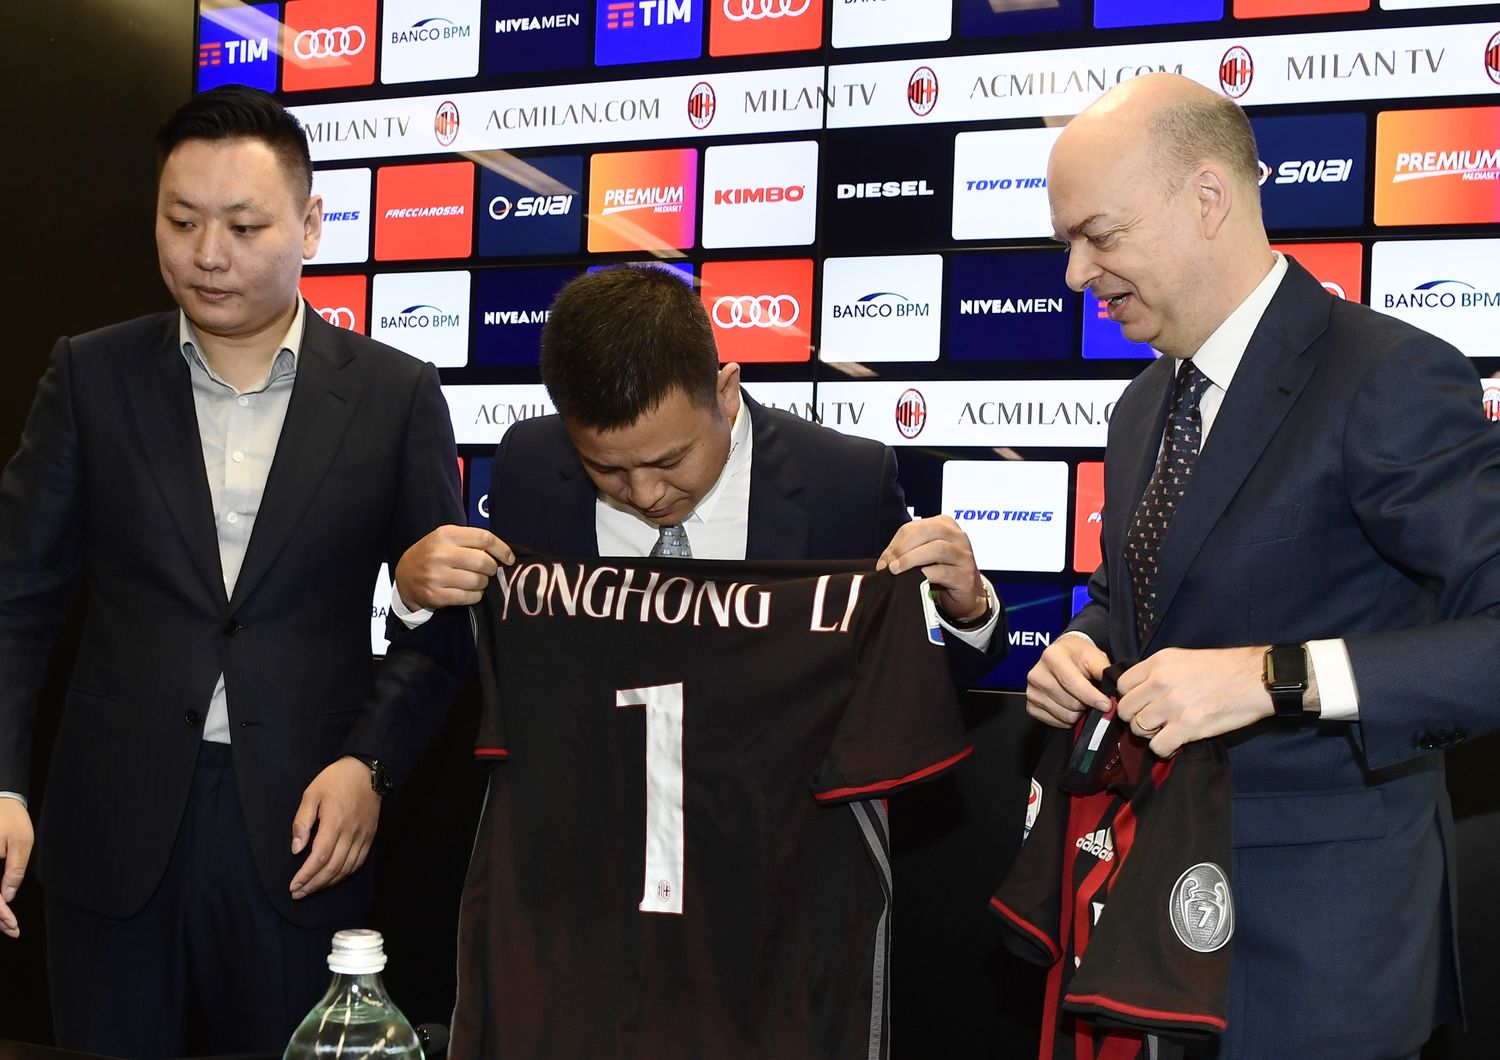 &nbsp; L'acquisto del Milan calcio da parte dell'imprenditore cinese&nbsp;Yonghong Li&nbsp;